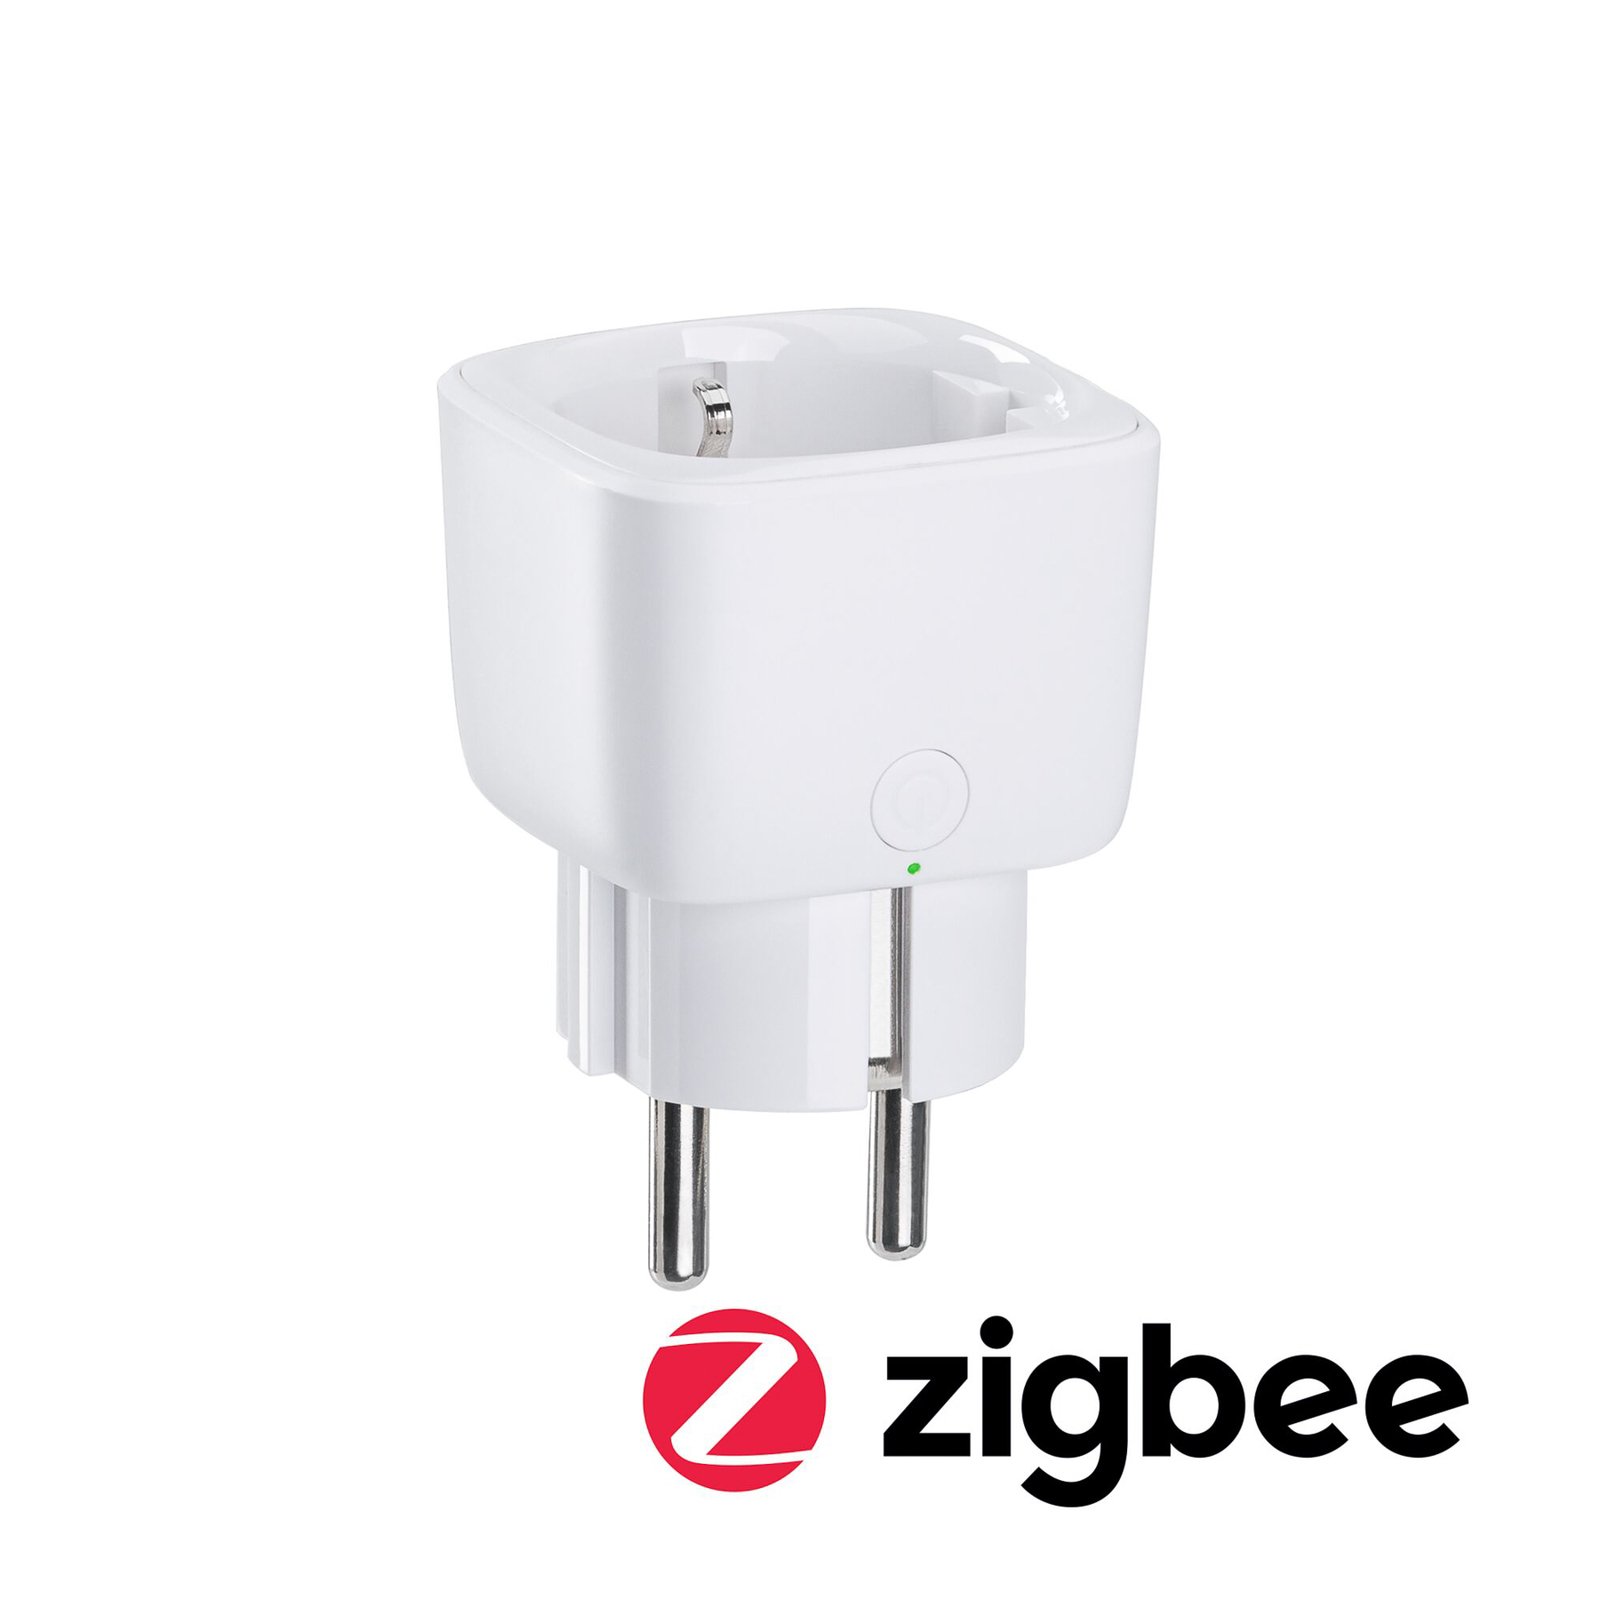 Paulmann ZigBee Smart Plug adaptador de enchufe